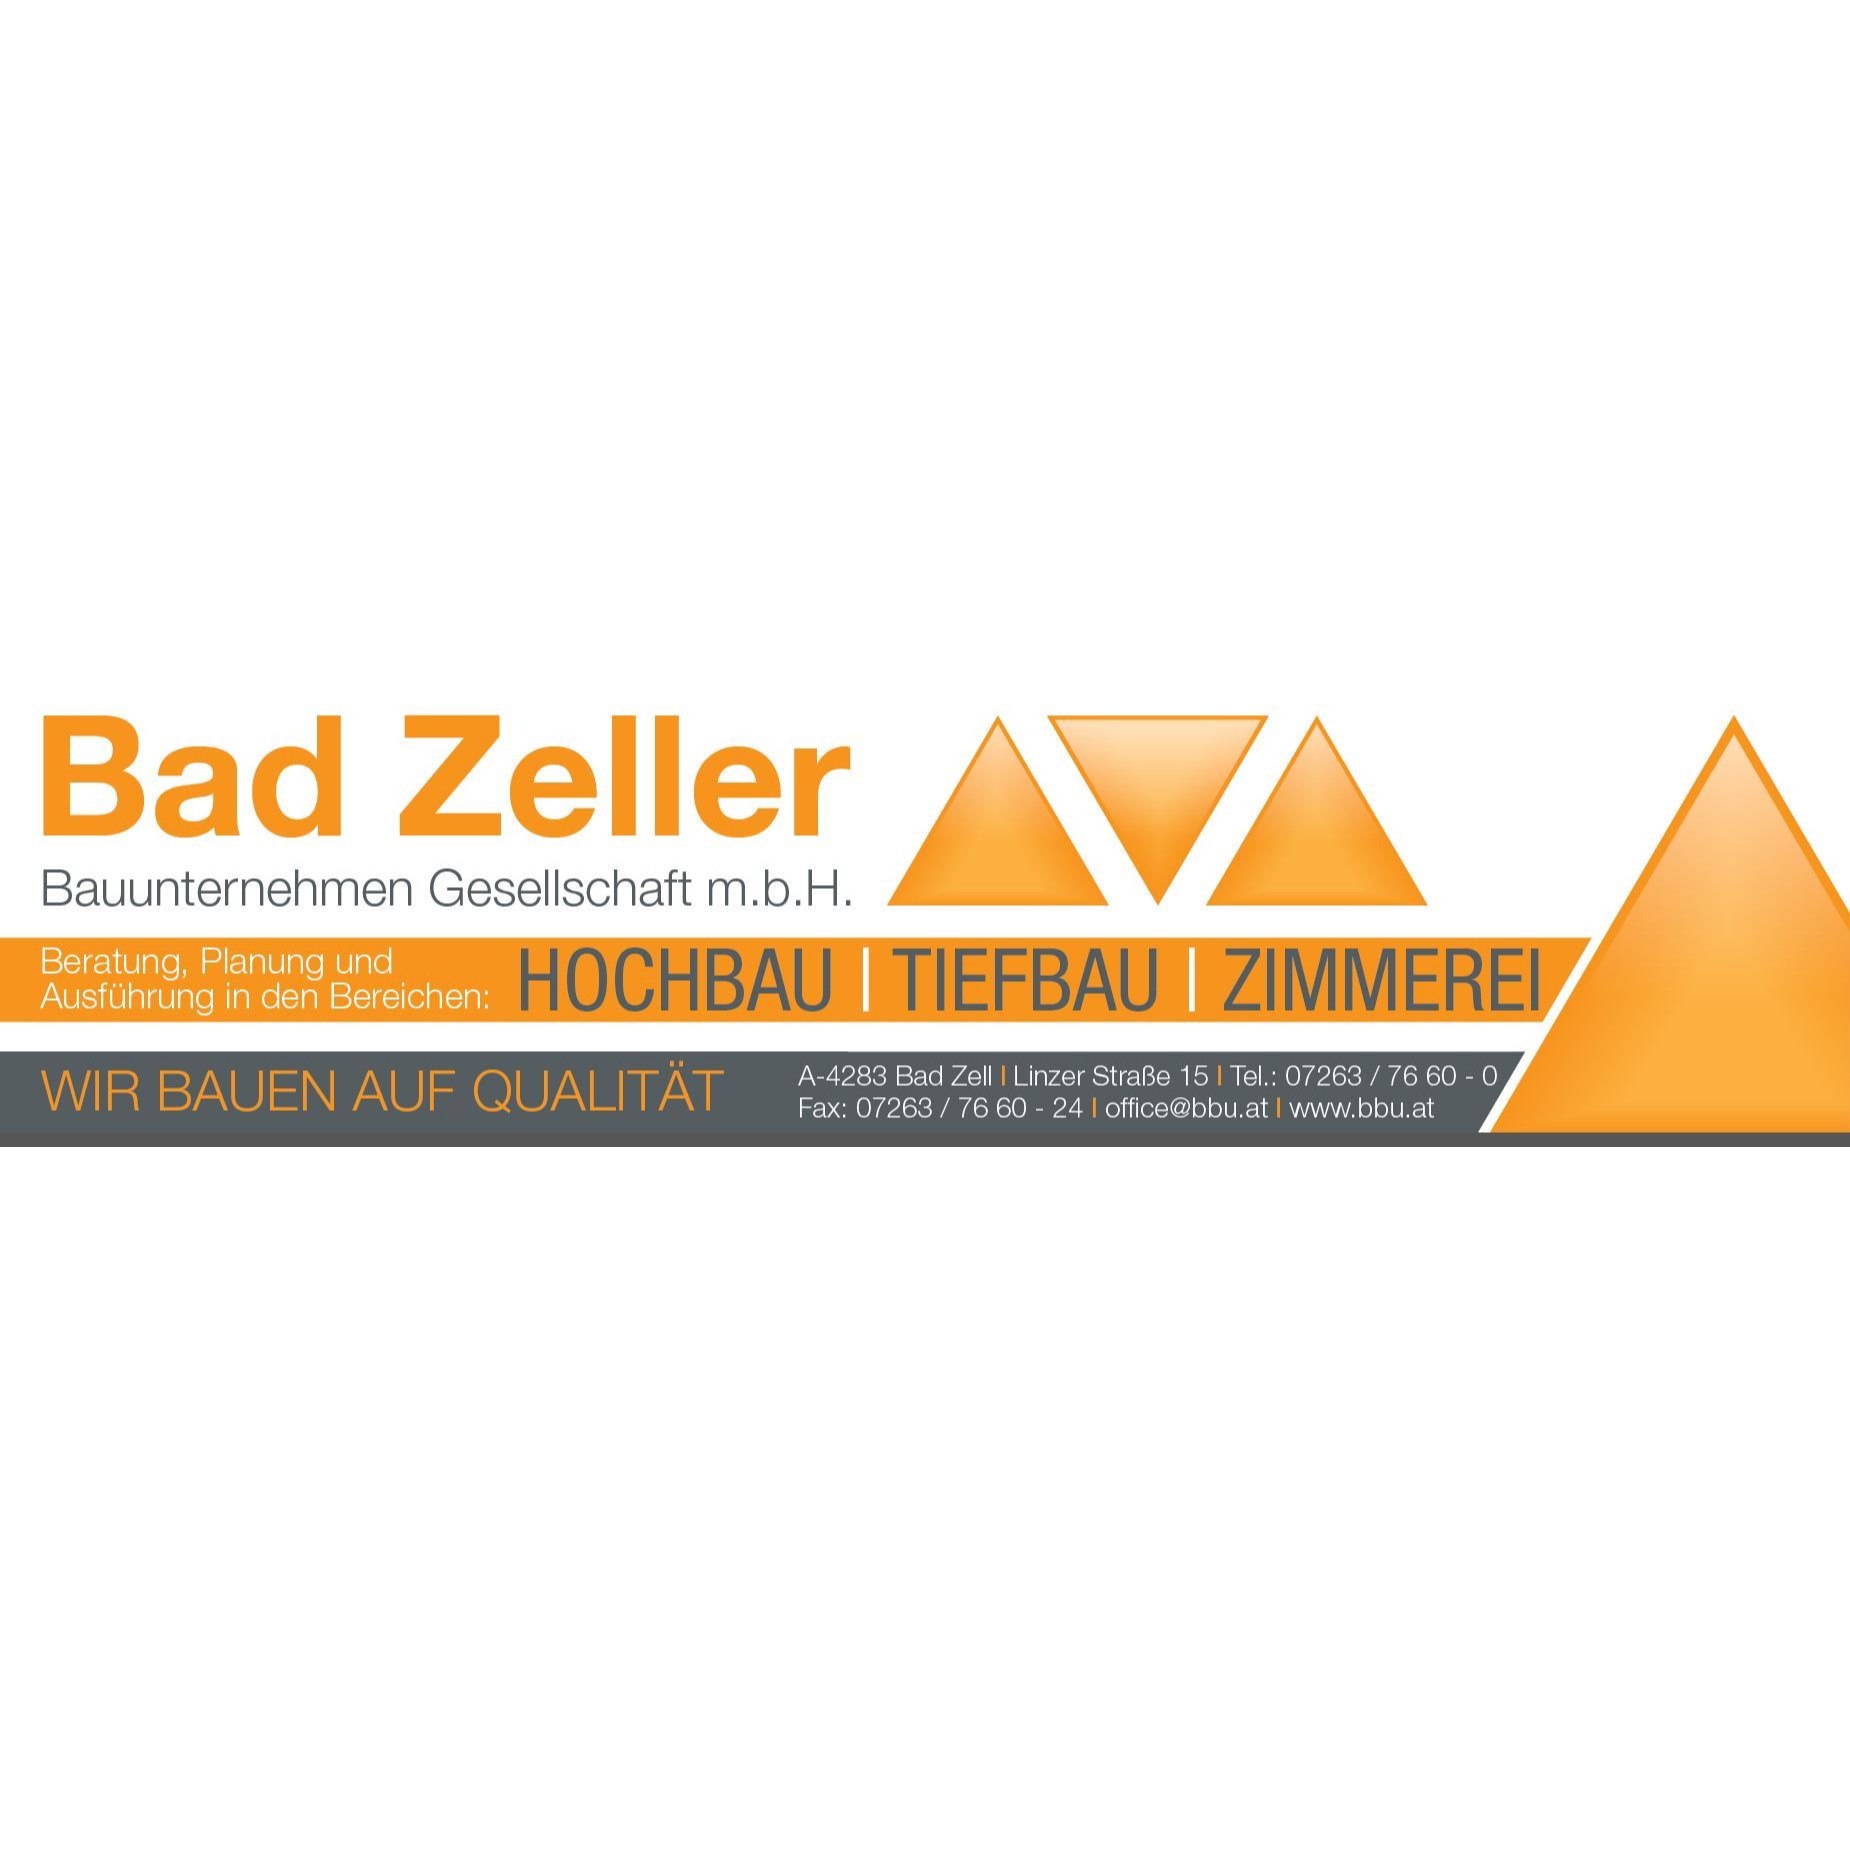 Bad Zeller Bauunternehmen Gesellschaft mbH Logo